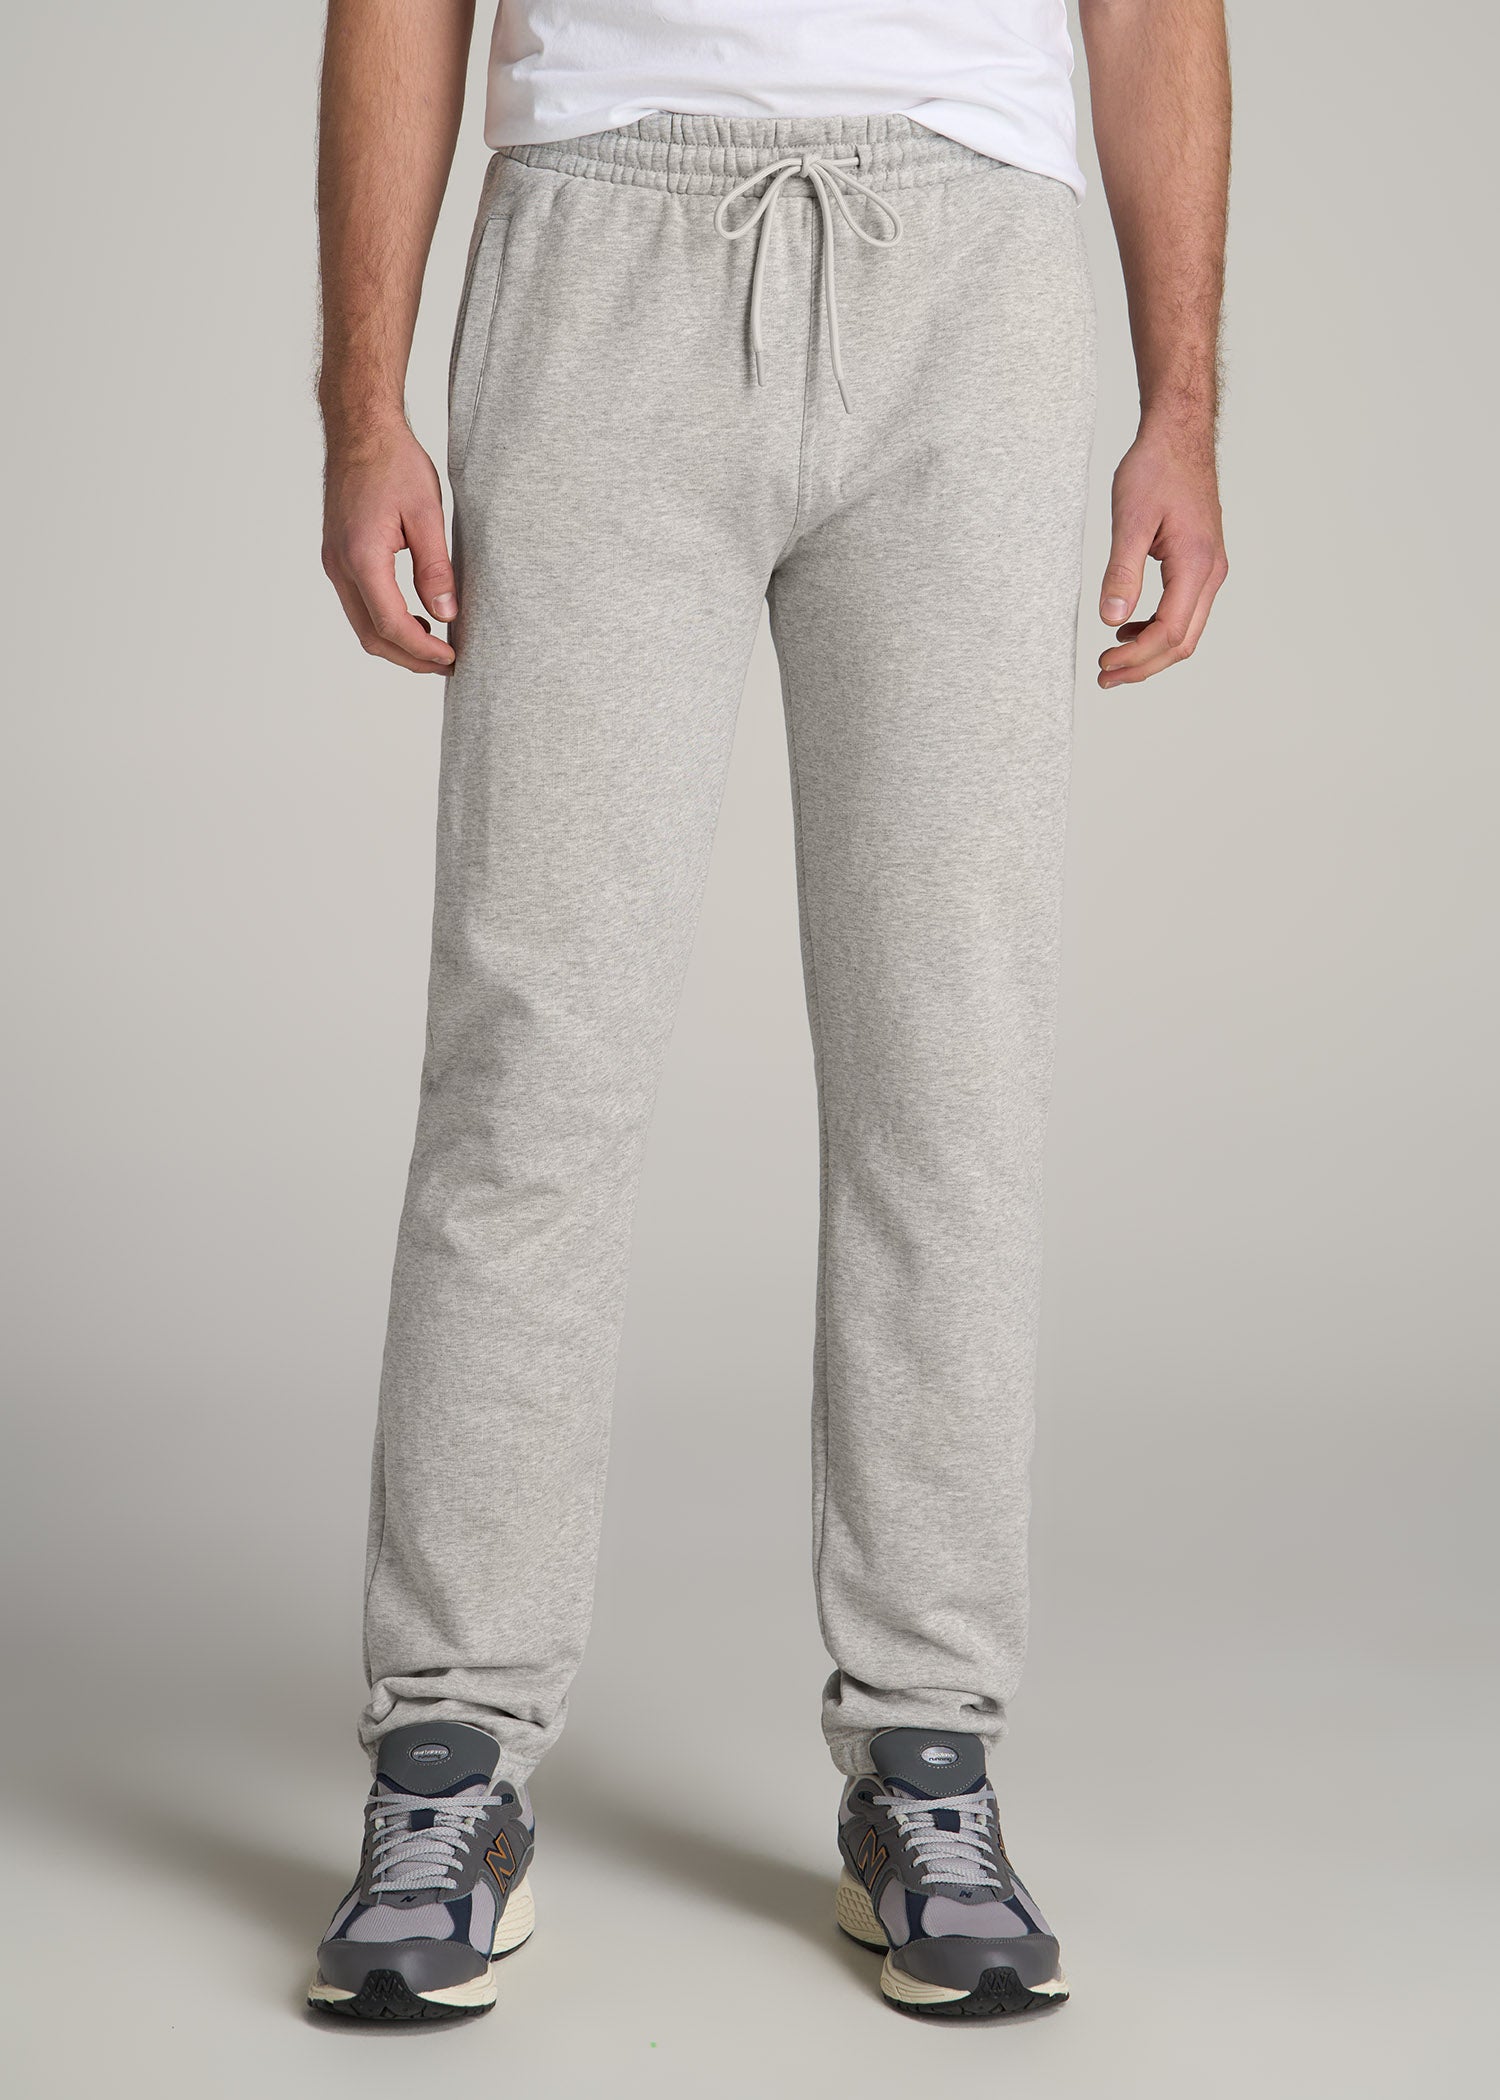 Closed Bottom Fleece Sweatpants with Side Seam Pockets